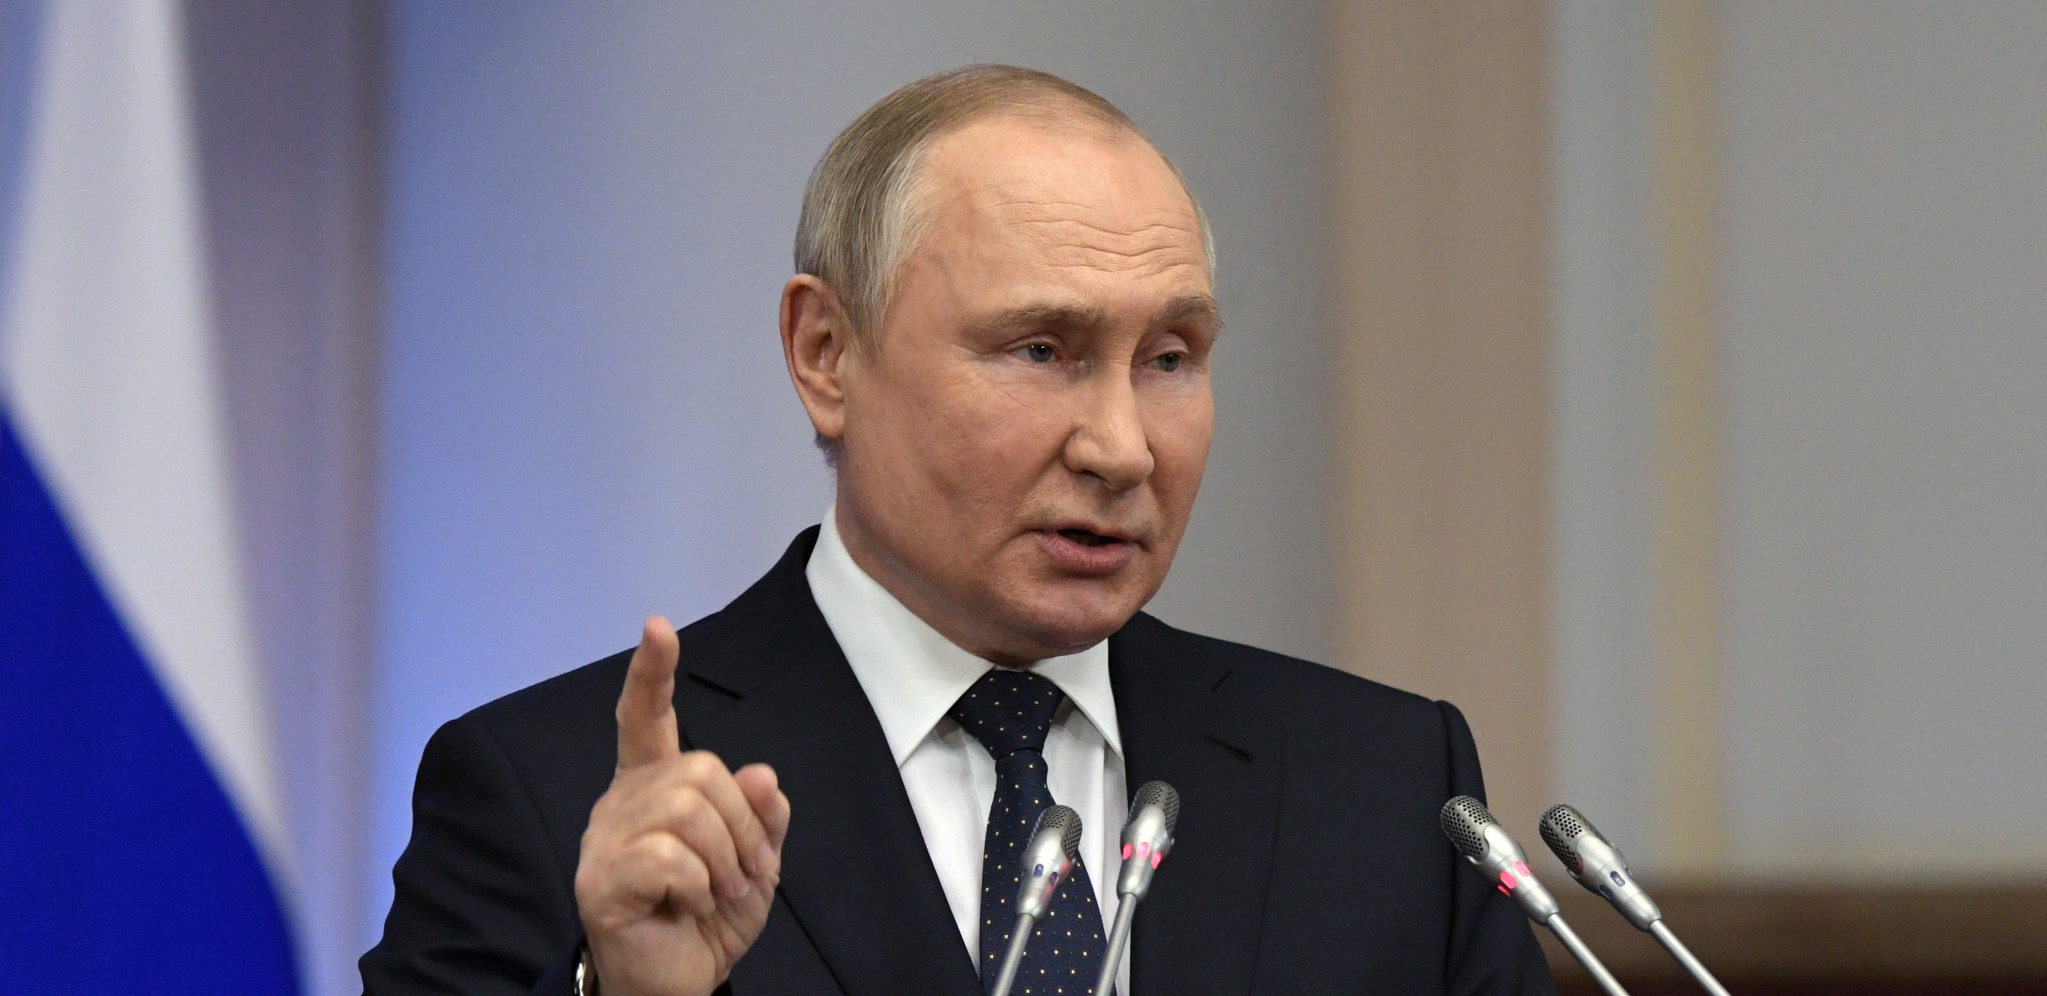 RUSIJA ŽESTOKO UPOZORILA Moskva zahteva bezuslovno obustavljanje napada